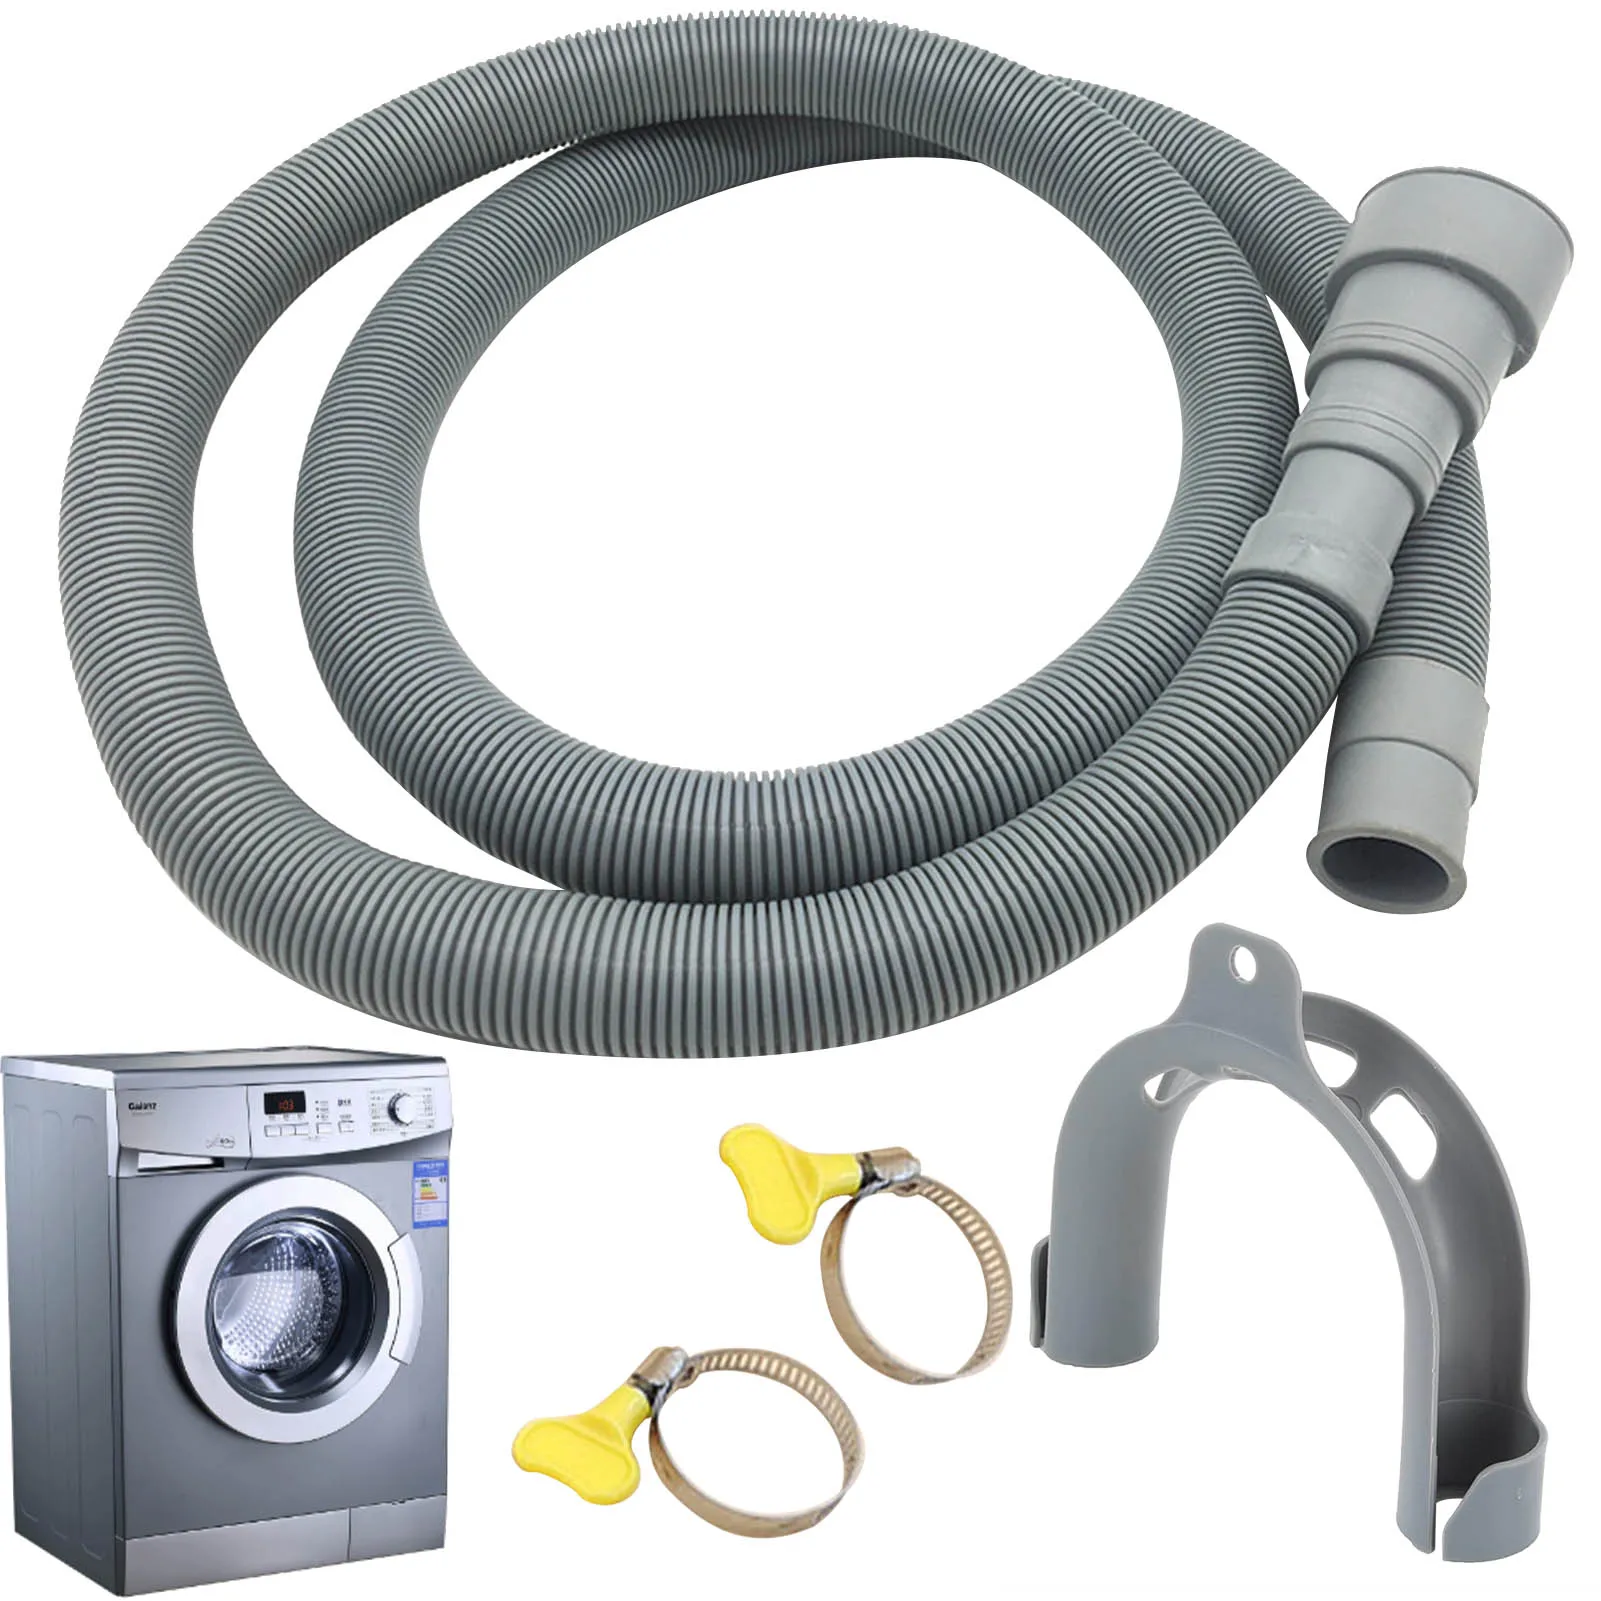 Drain Hose for Washing Machines Drain Hose Extension Extended Drain Hose Kit for Washing Machine Dishwasher and Dryer